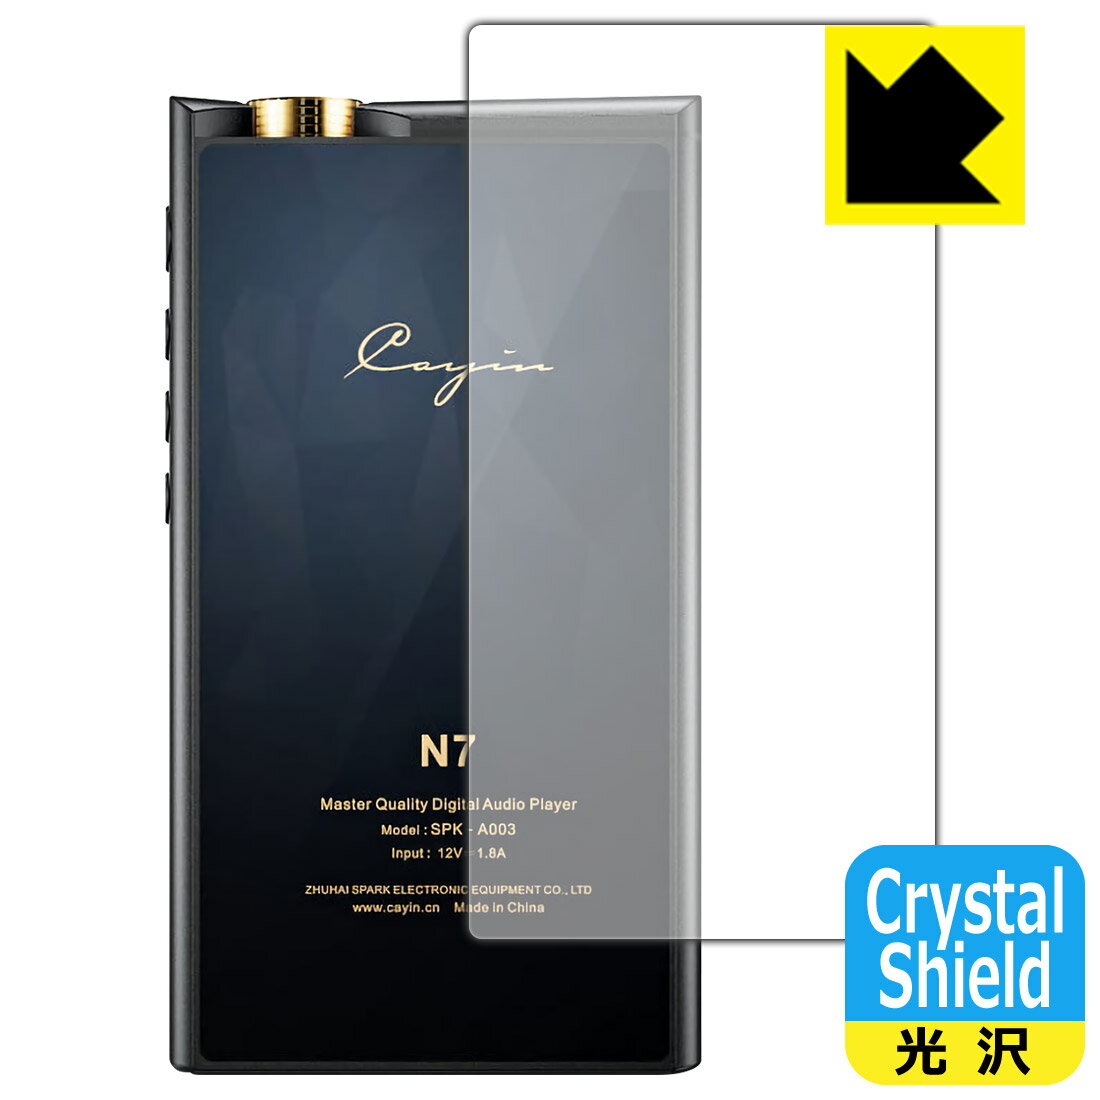 Crystal Shield【光沢】保護フィルム Cayin N7 (背面用) 日本製 自社製造直販